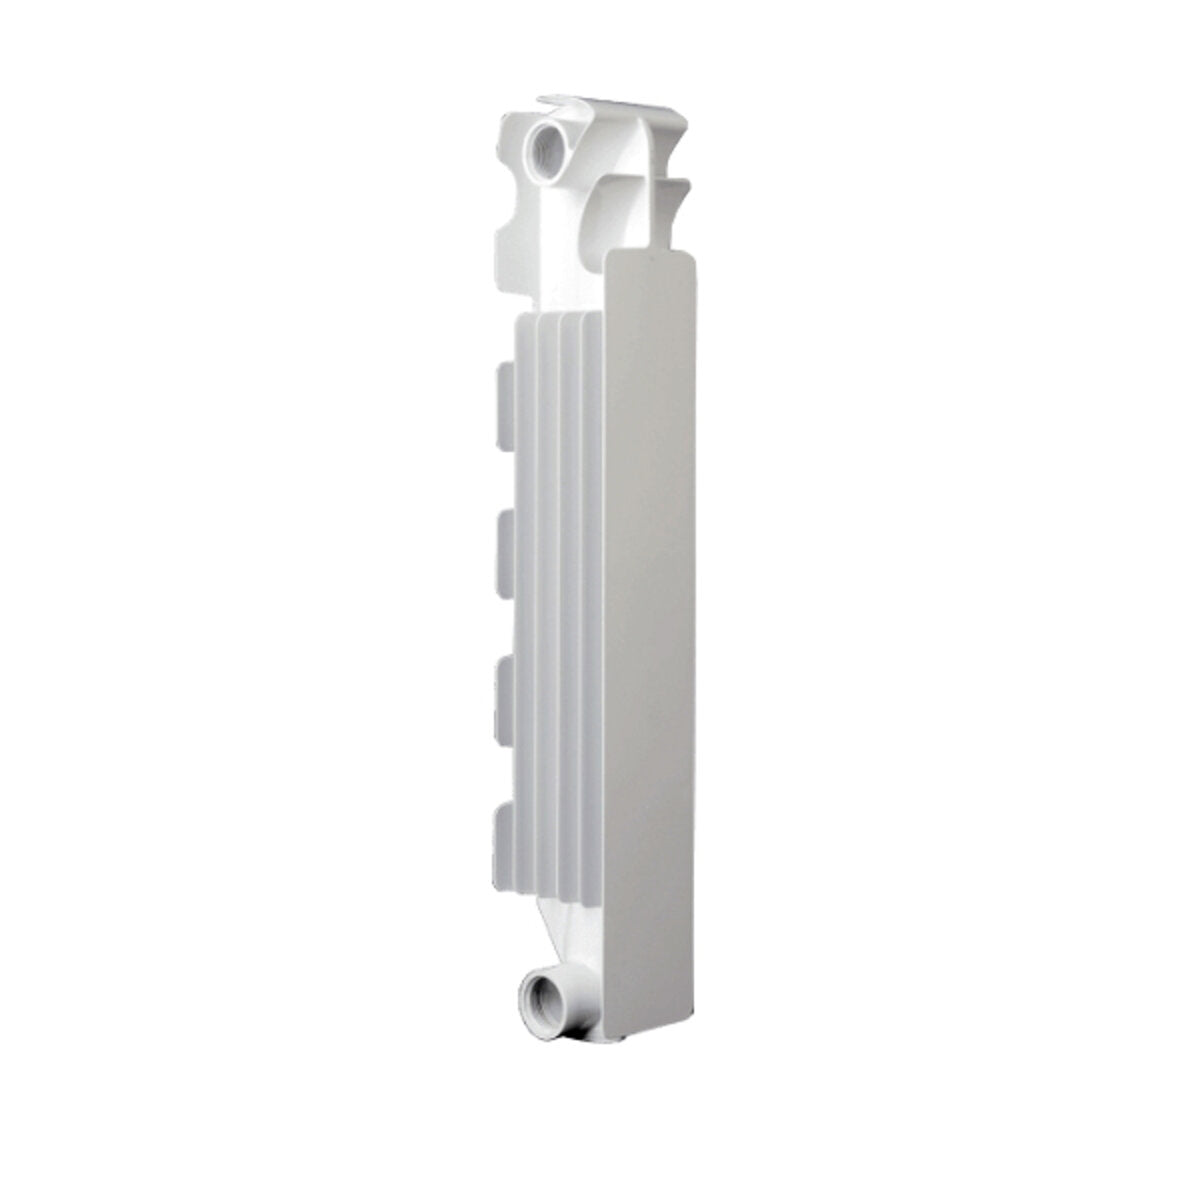 Fondital radiator in die-cast aluminum calidor super b4 5 elements center distance 350 mm